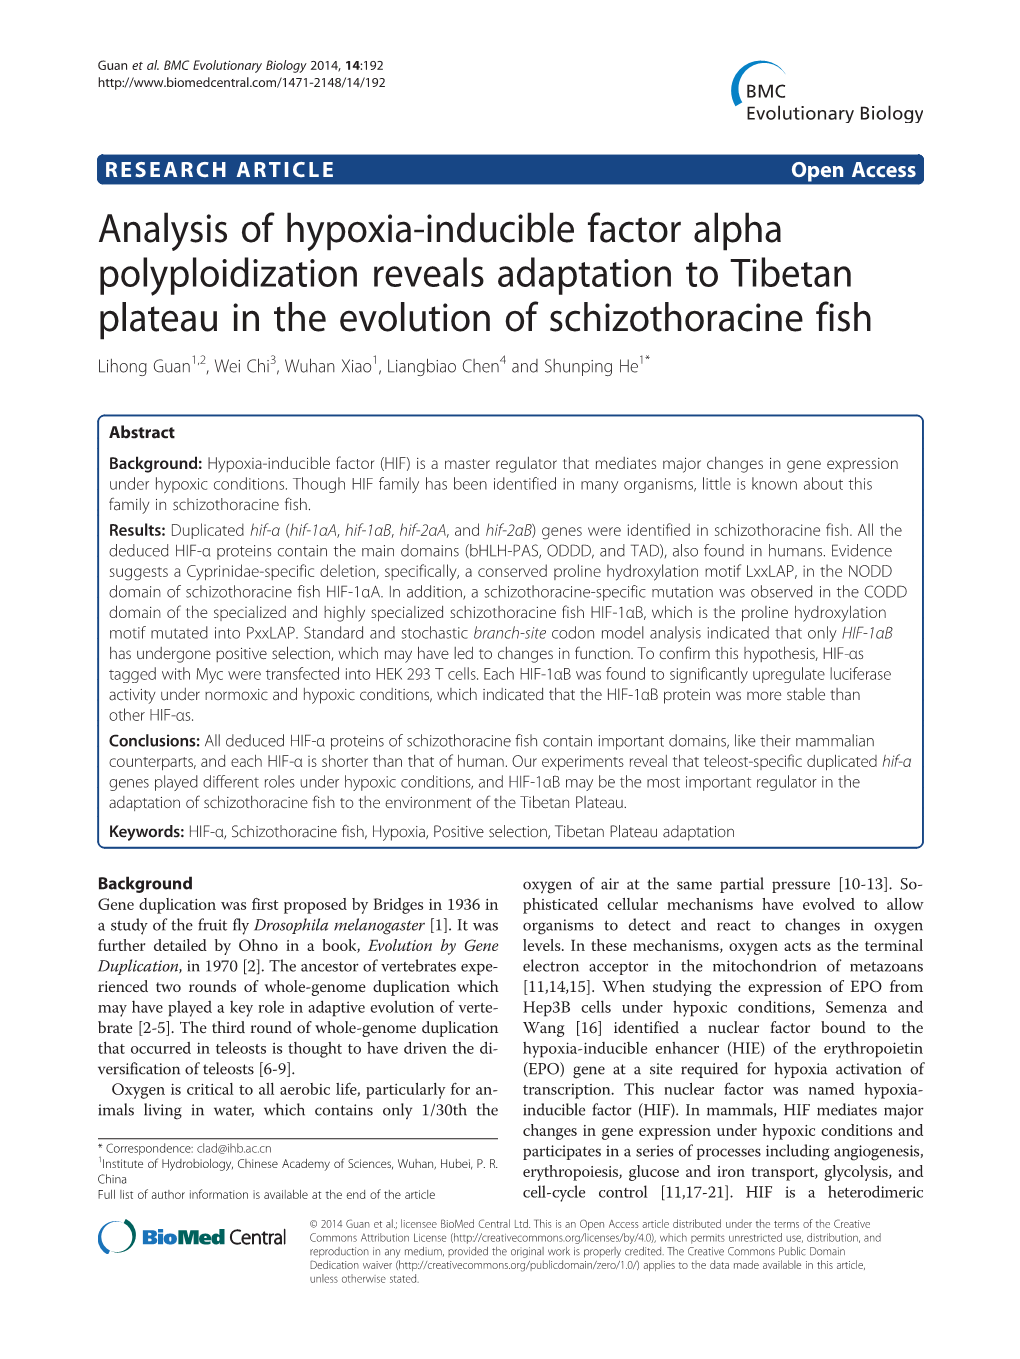 Analysis of Hypoxia-Inducible Factor Alpha Polyploidization Reveals Adaptation to Tibetan Plateau in the Evolution of Schizothoracine Fish